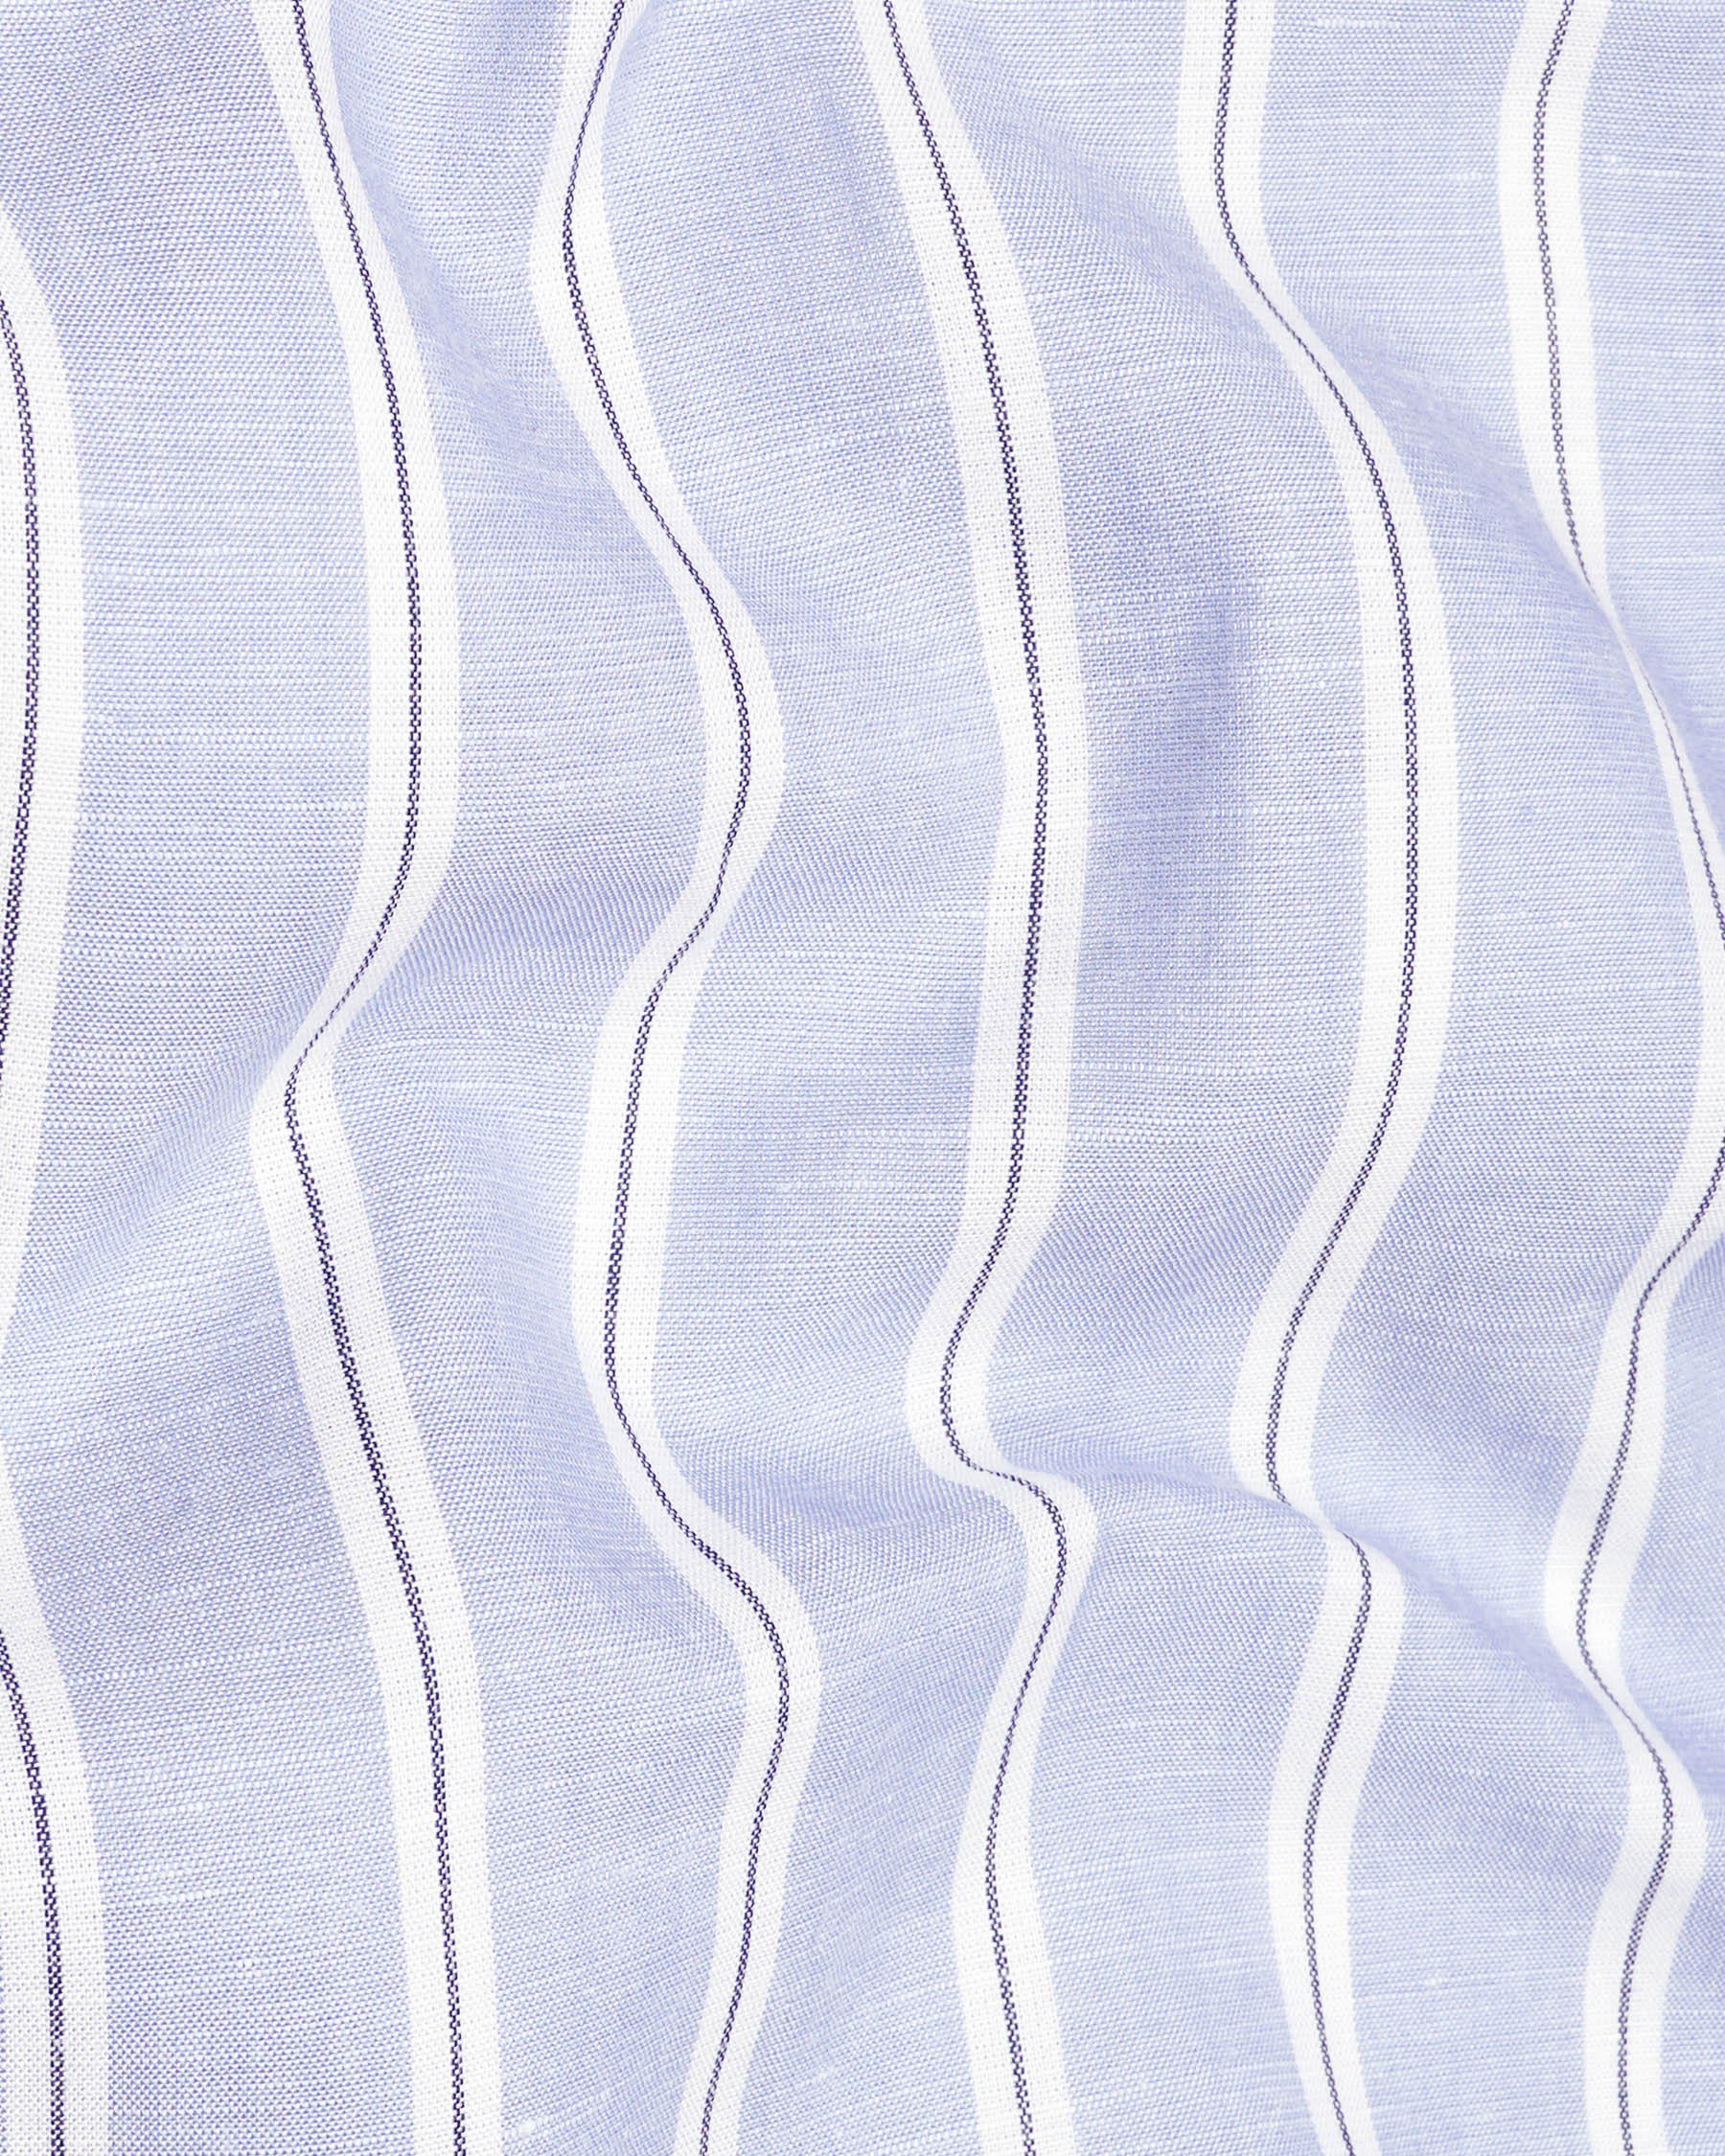 Mercury Blue with White Vertical Striped Twill Premium Cotton Shirt 7572-38,7572-38,7572-39,7572-39,7572-40,7572-40,7572-42,7572-42,7572-44,7572-44,7572-46,7572-46,7572-48,7572-48,7572-50,7572-50,7572-52,7572-52